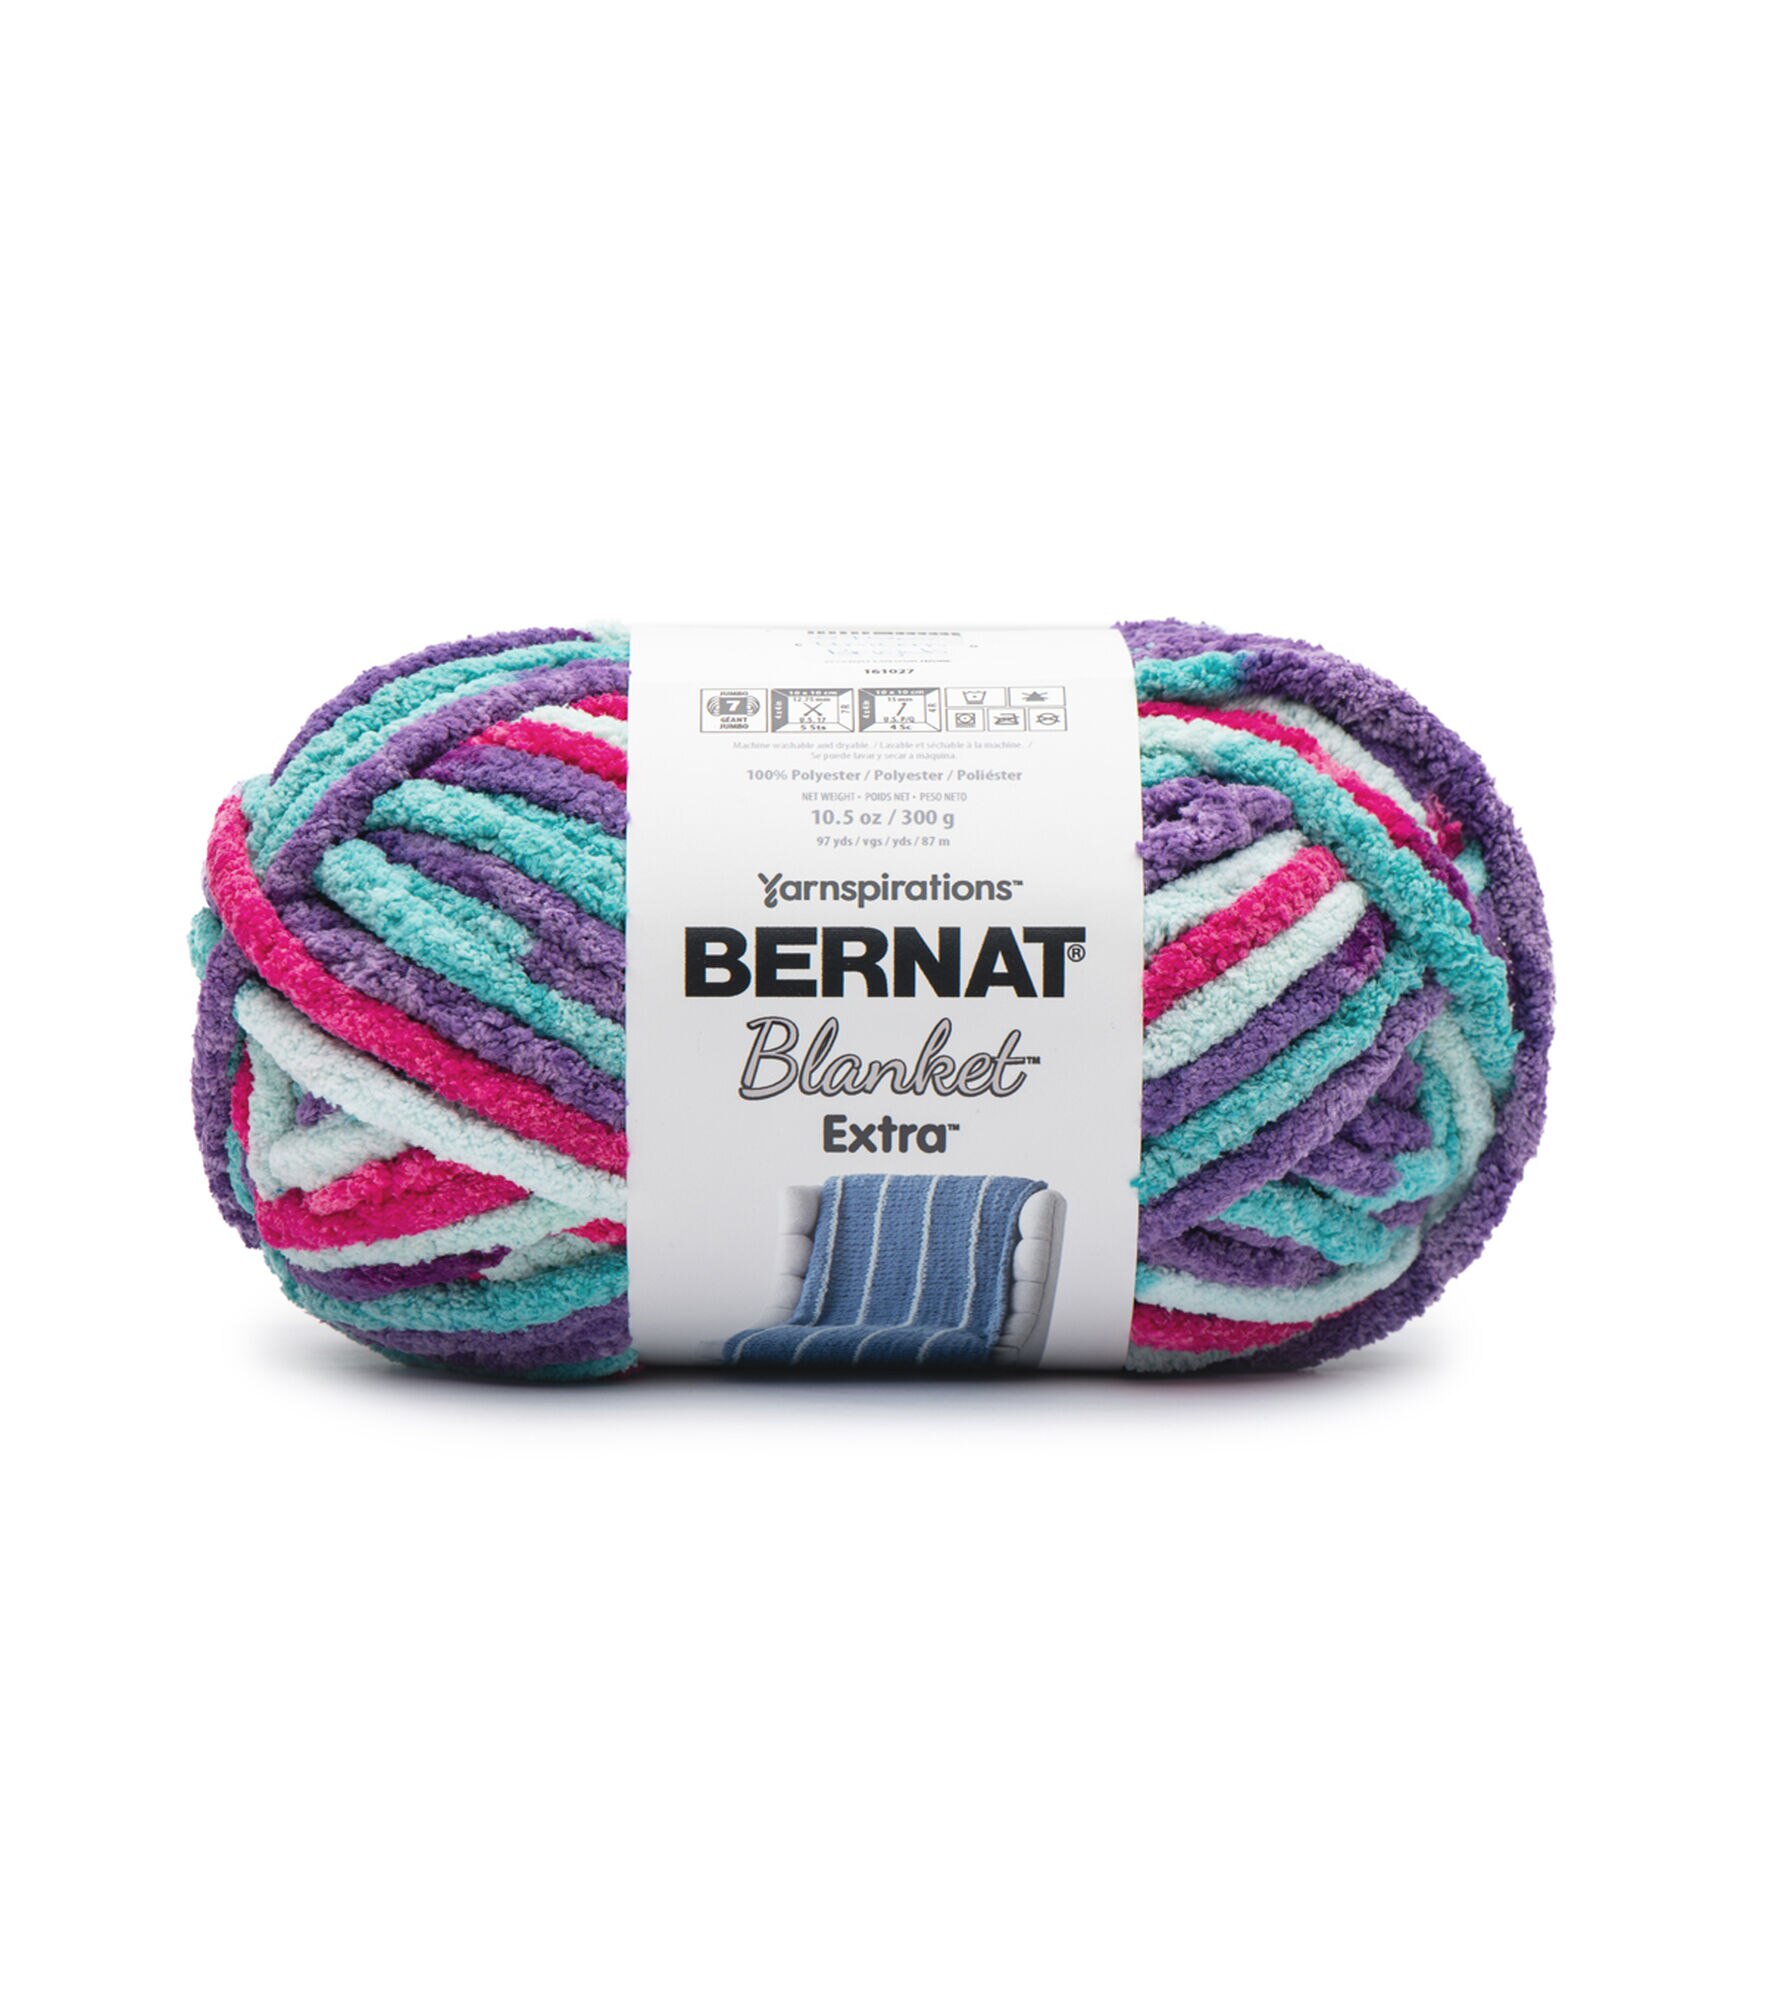 Bernat Blanket Brights Yarn, JOANN